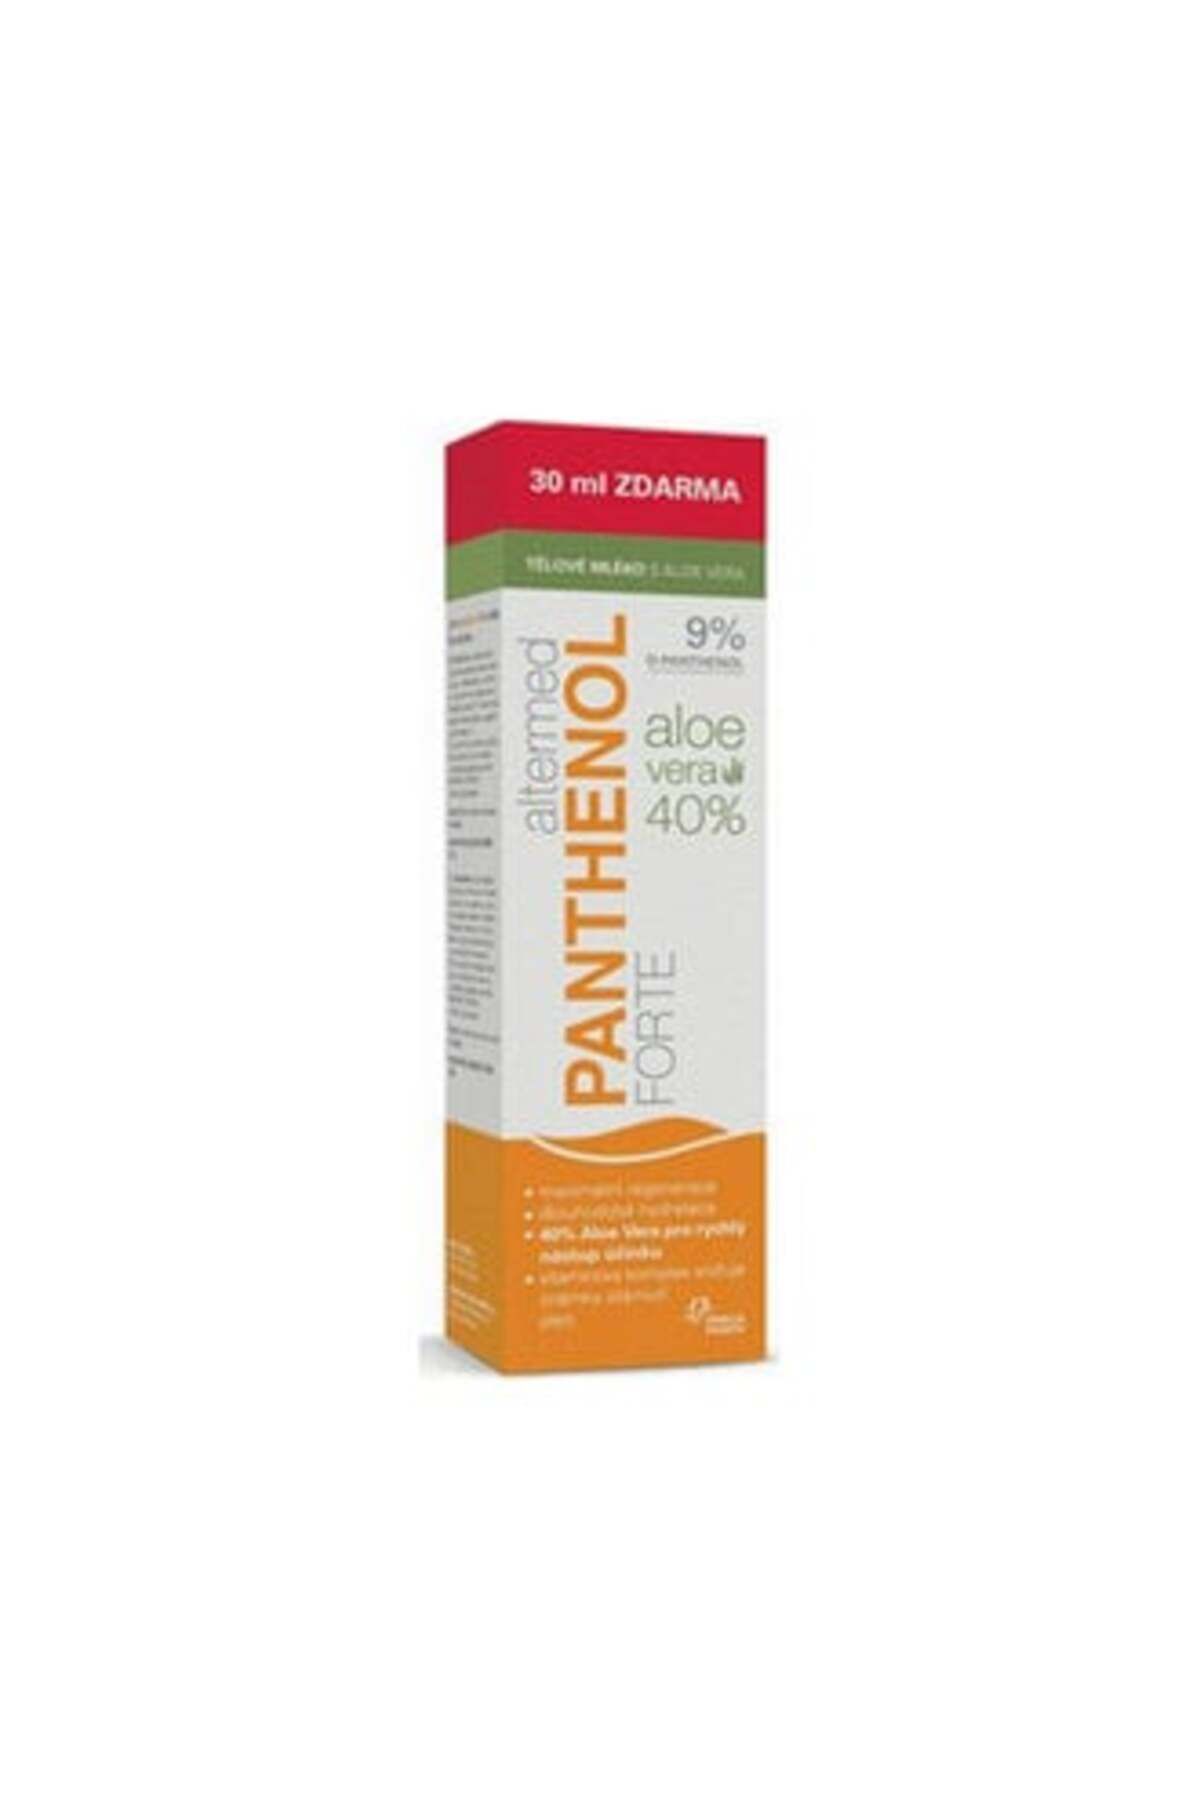 Altermed Panthenol Forte Body Milk %9 Aleovera 230Ml ( 1 ADET )